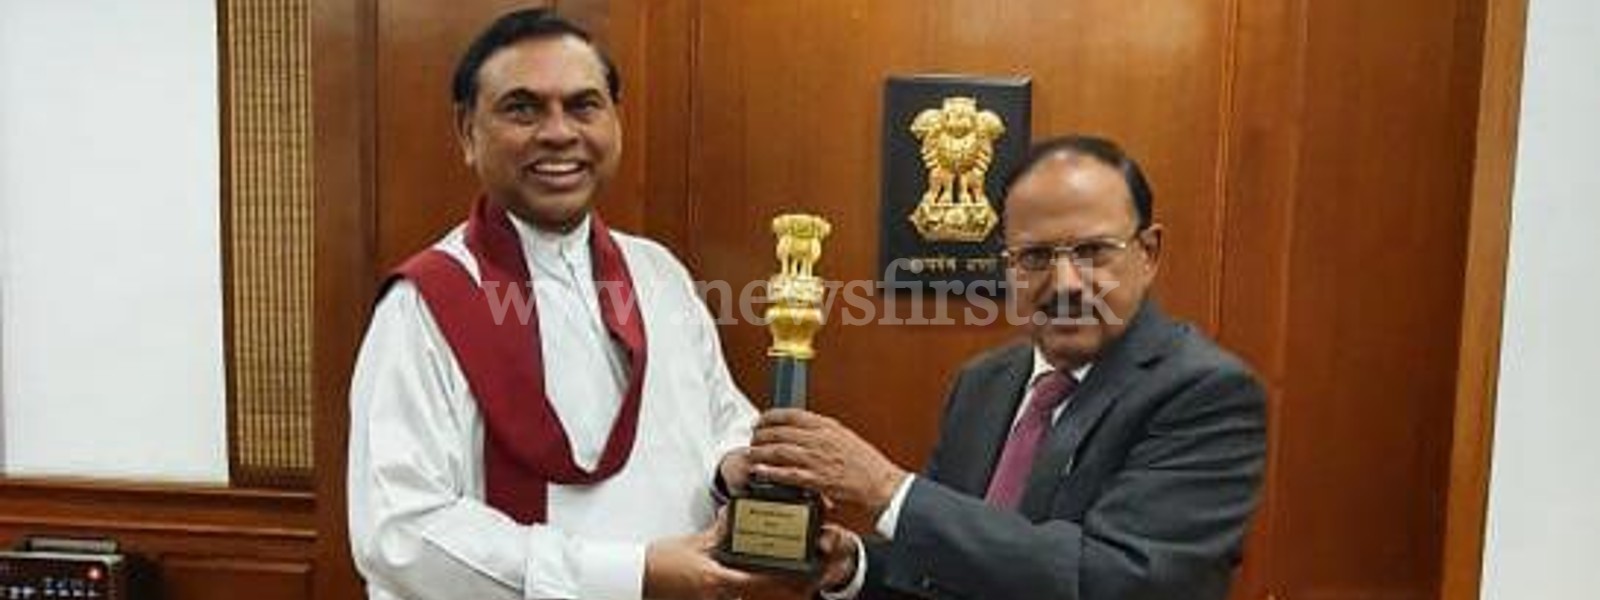 Sri Lanka’s Finance Minister meets India’s National Security Advisor